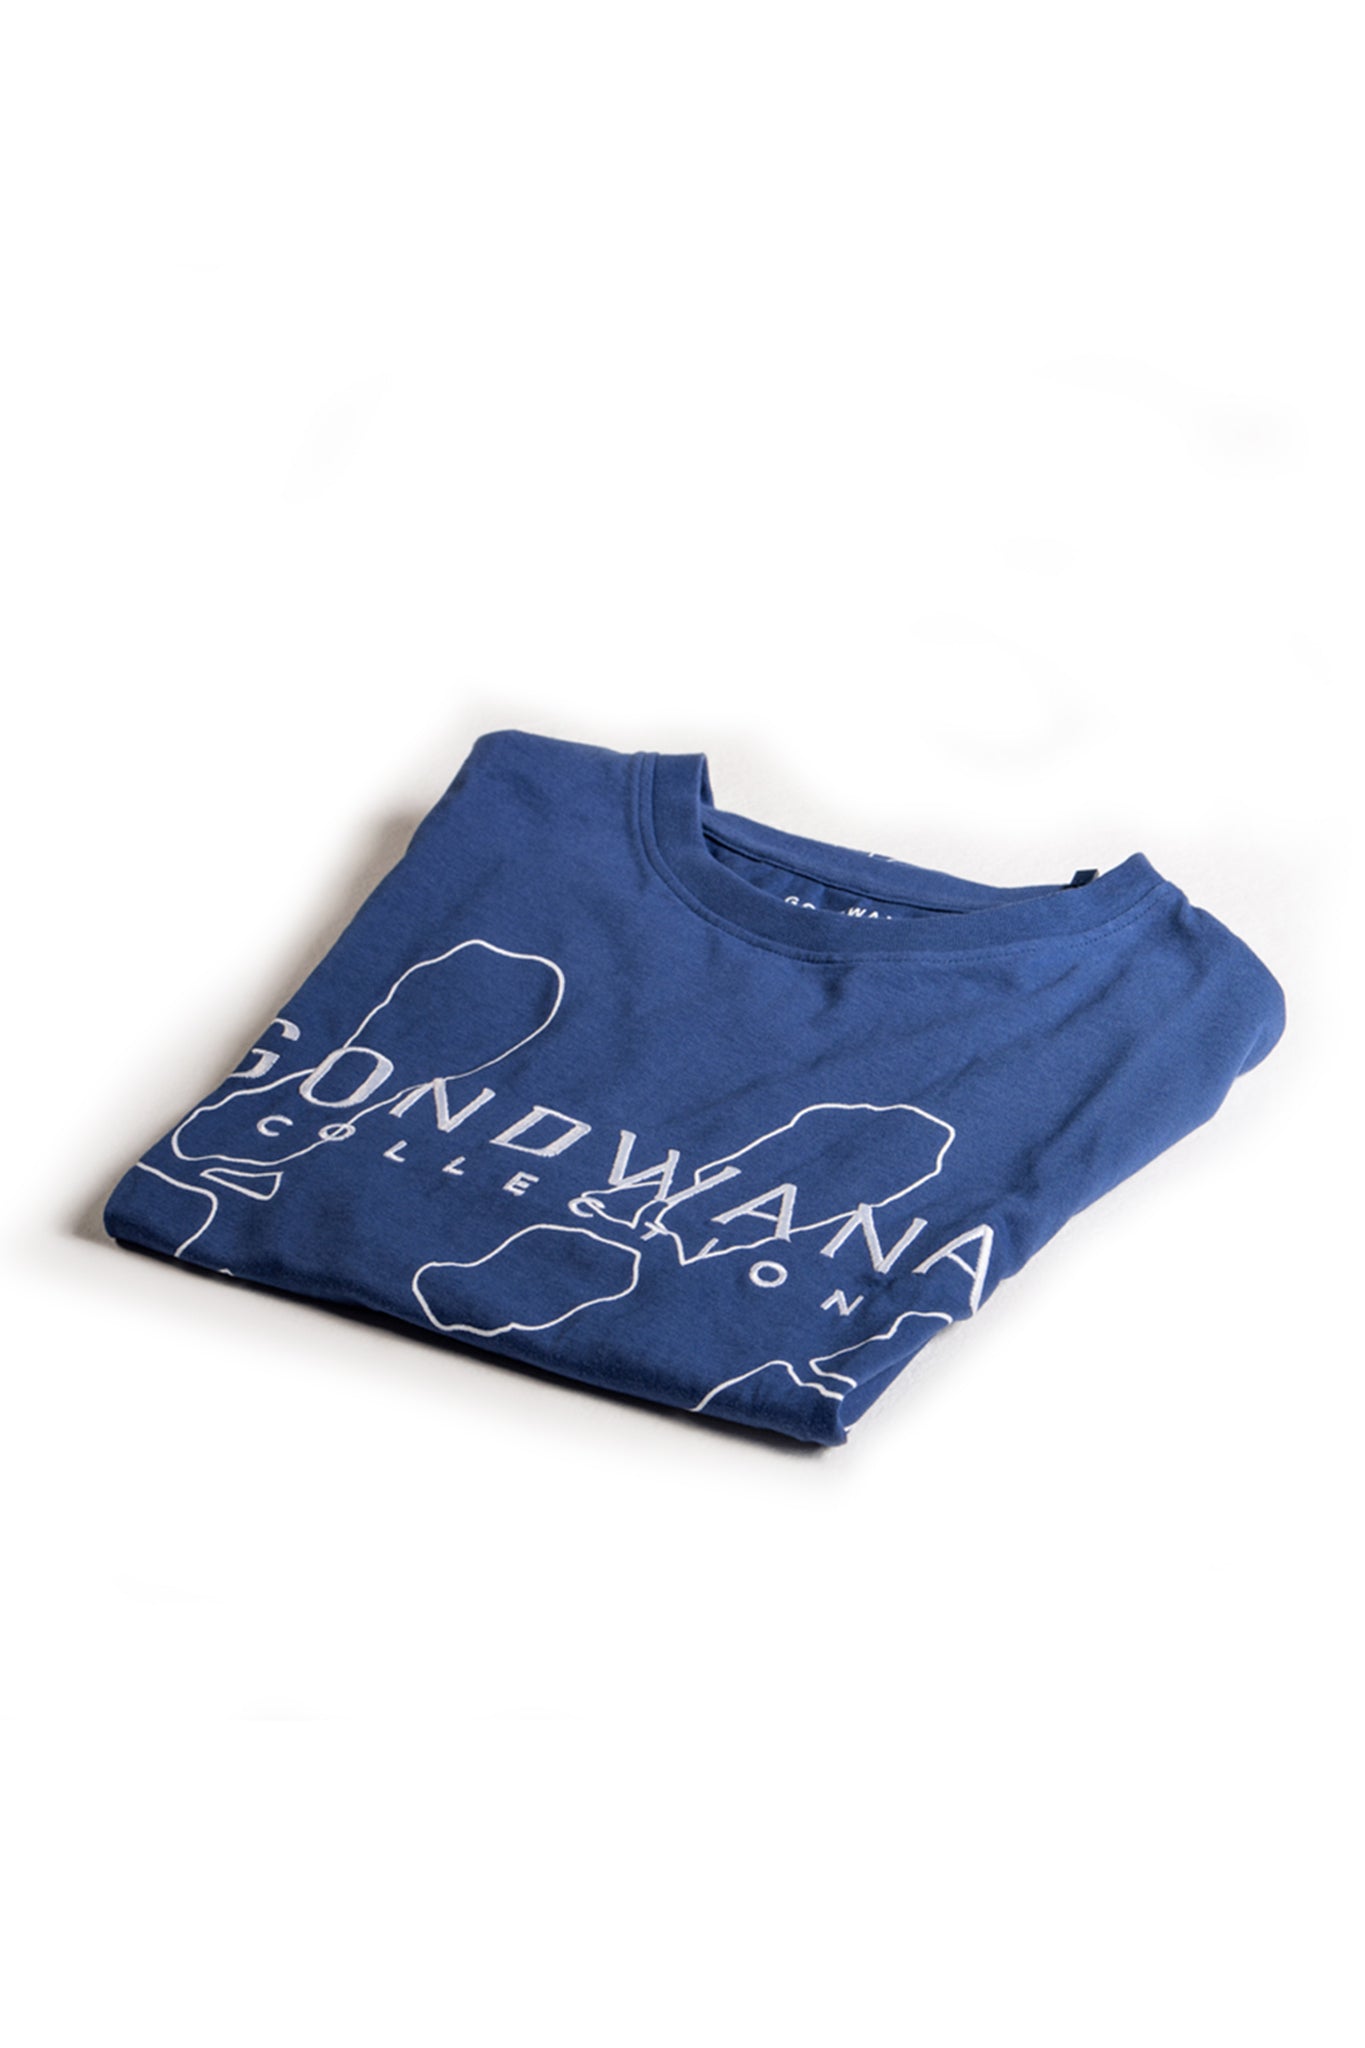 Gondwana Men's T-shirt Navy